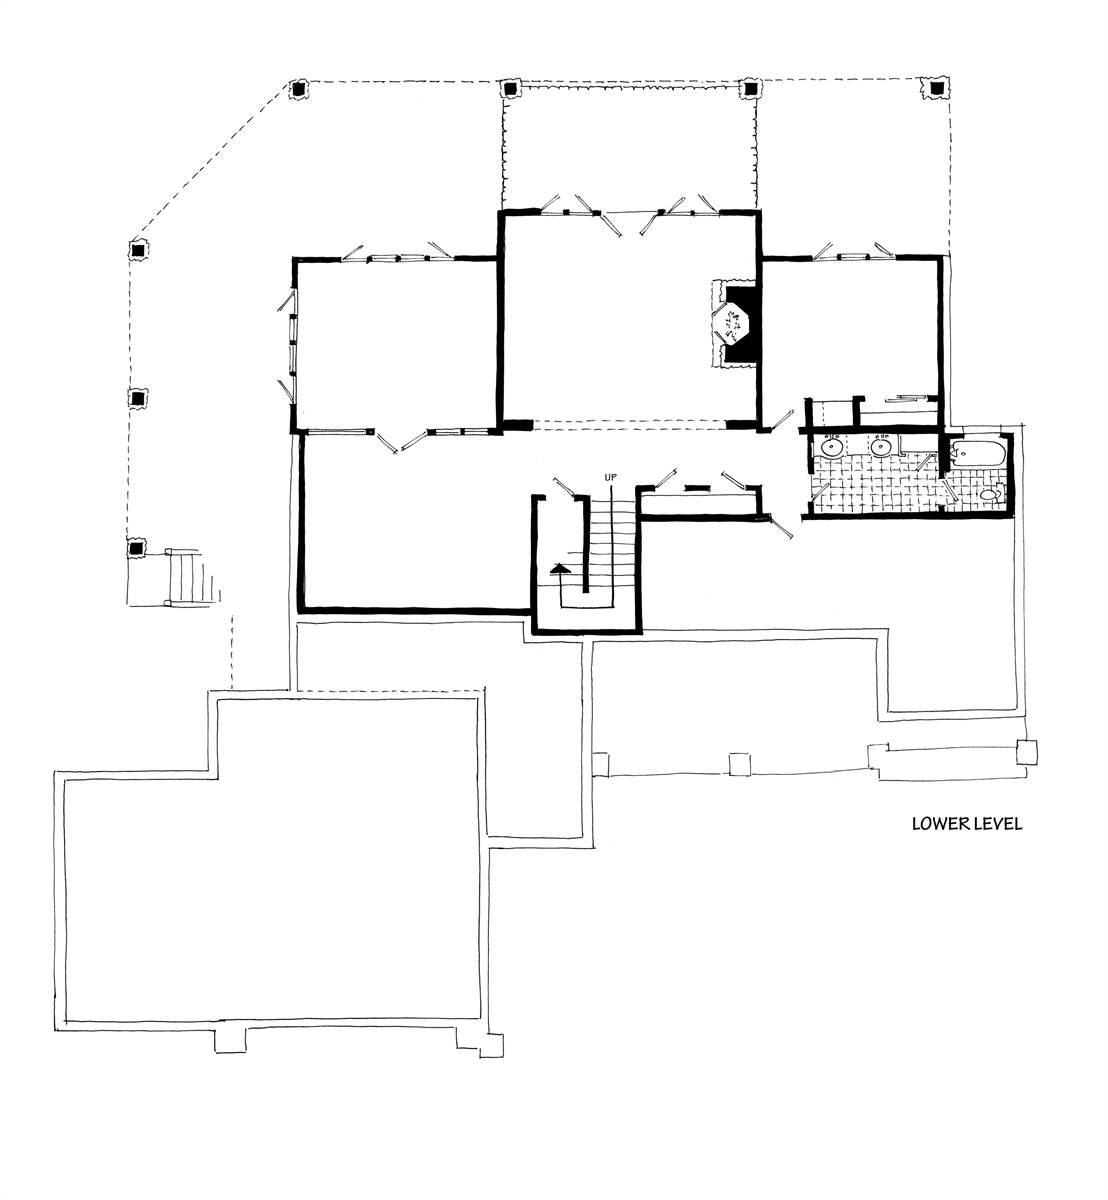 Lower Level Floor Plan